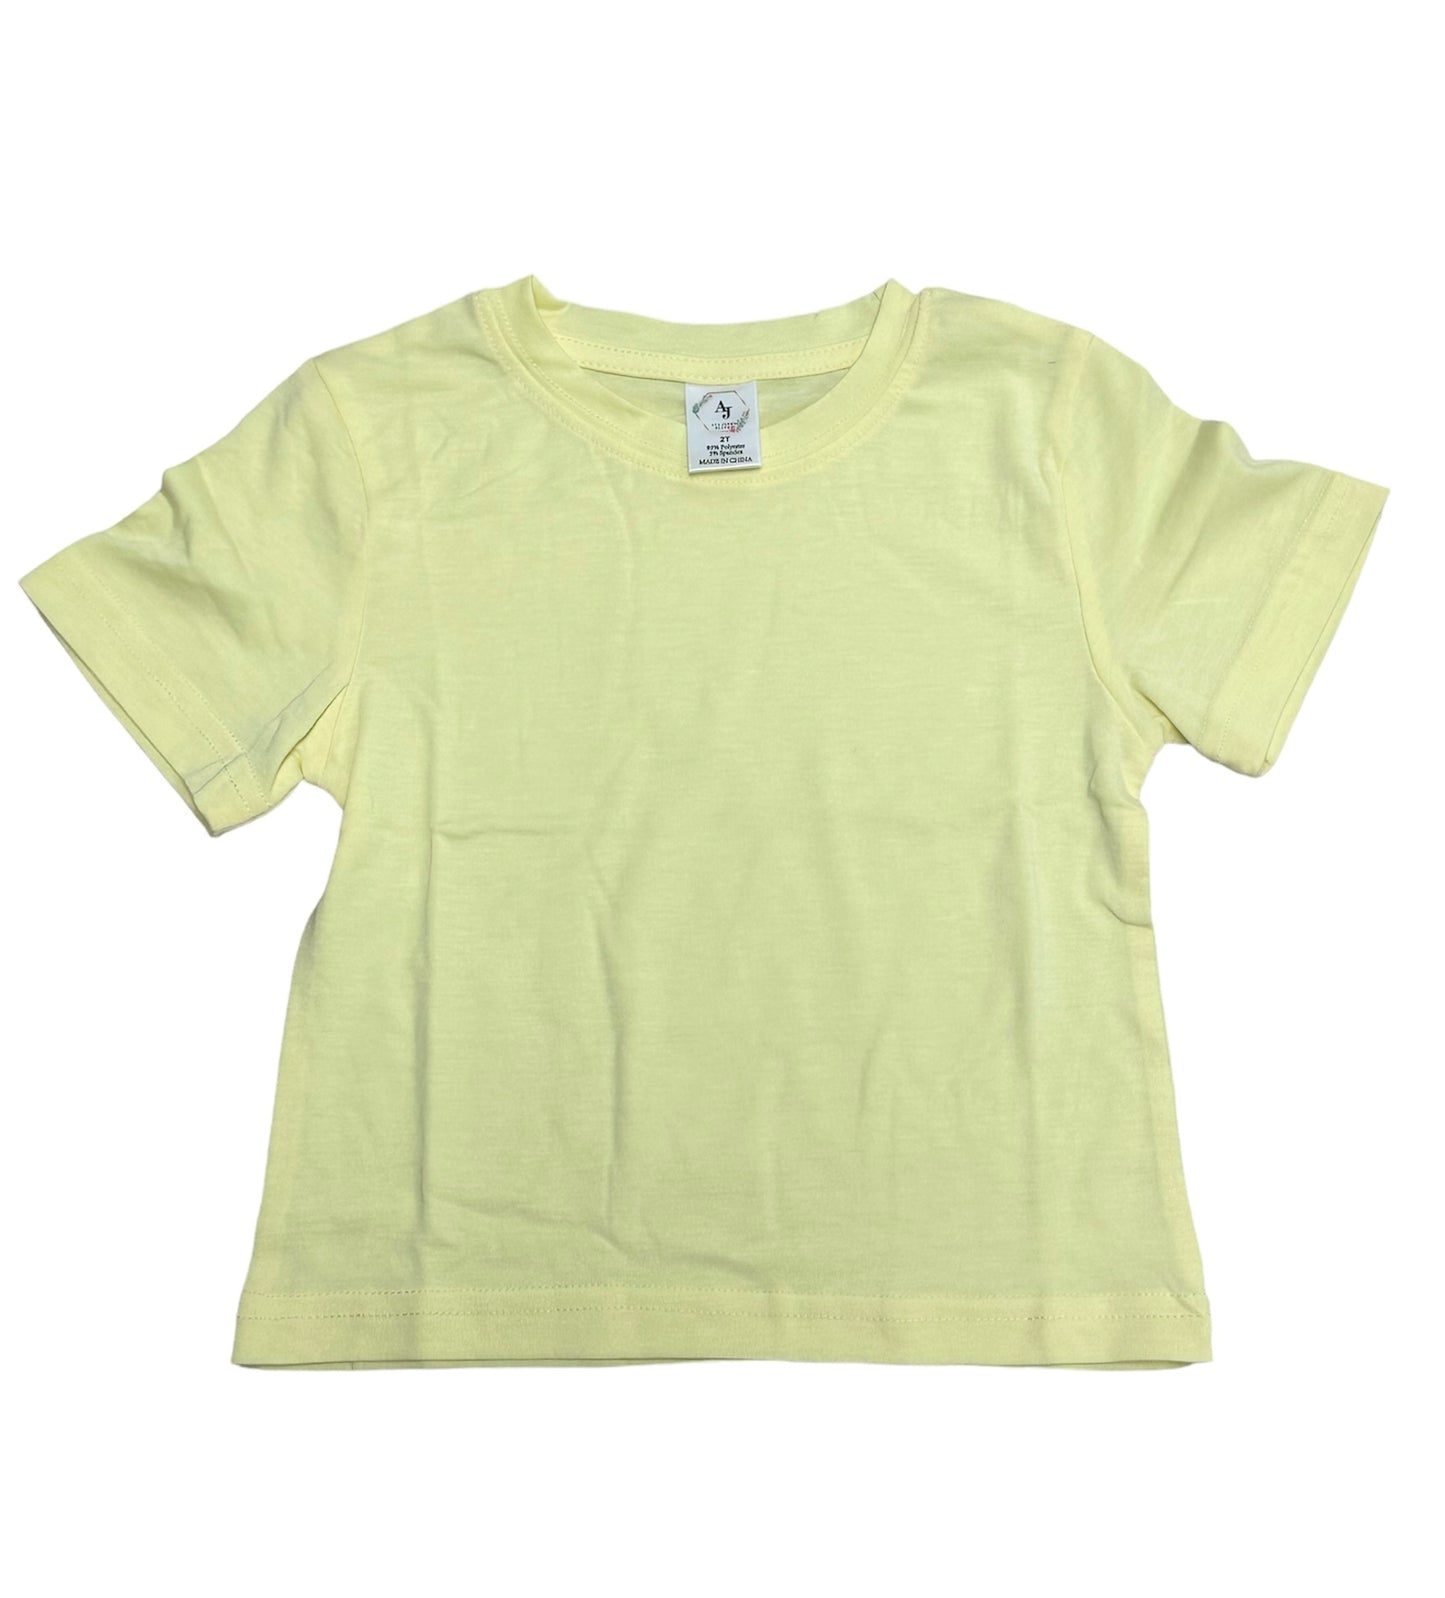 Spring Solid Kids Unisex Shirt